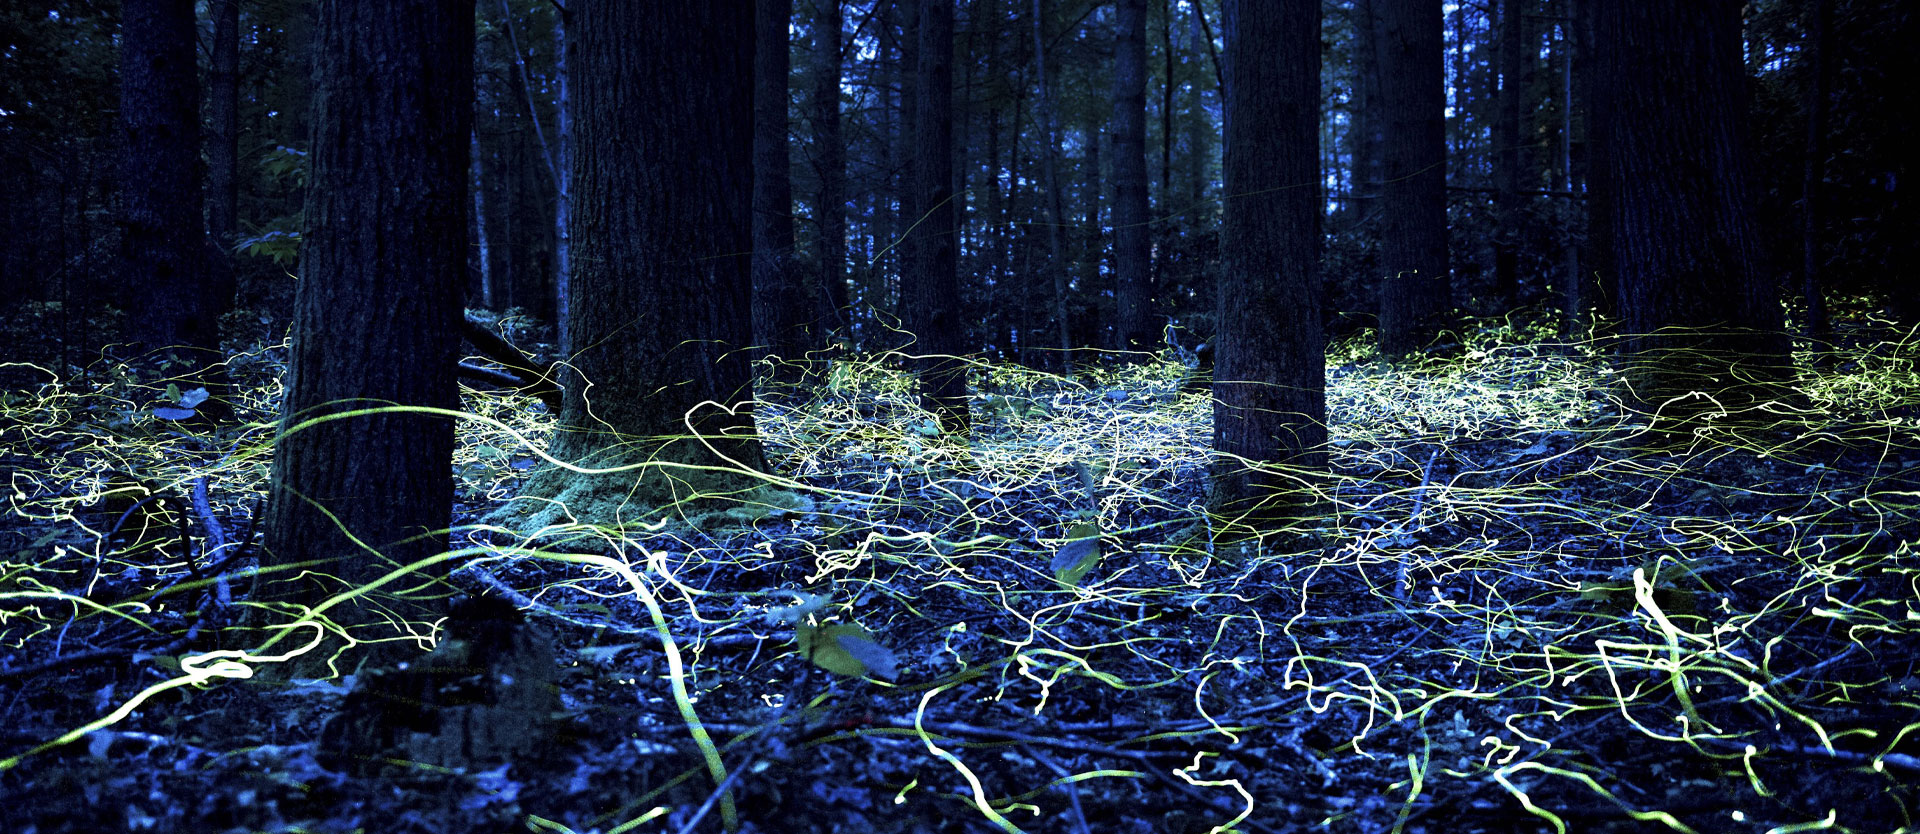 Fireflies under threat